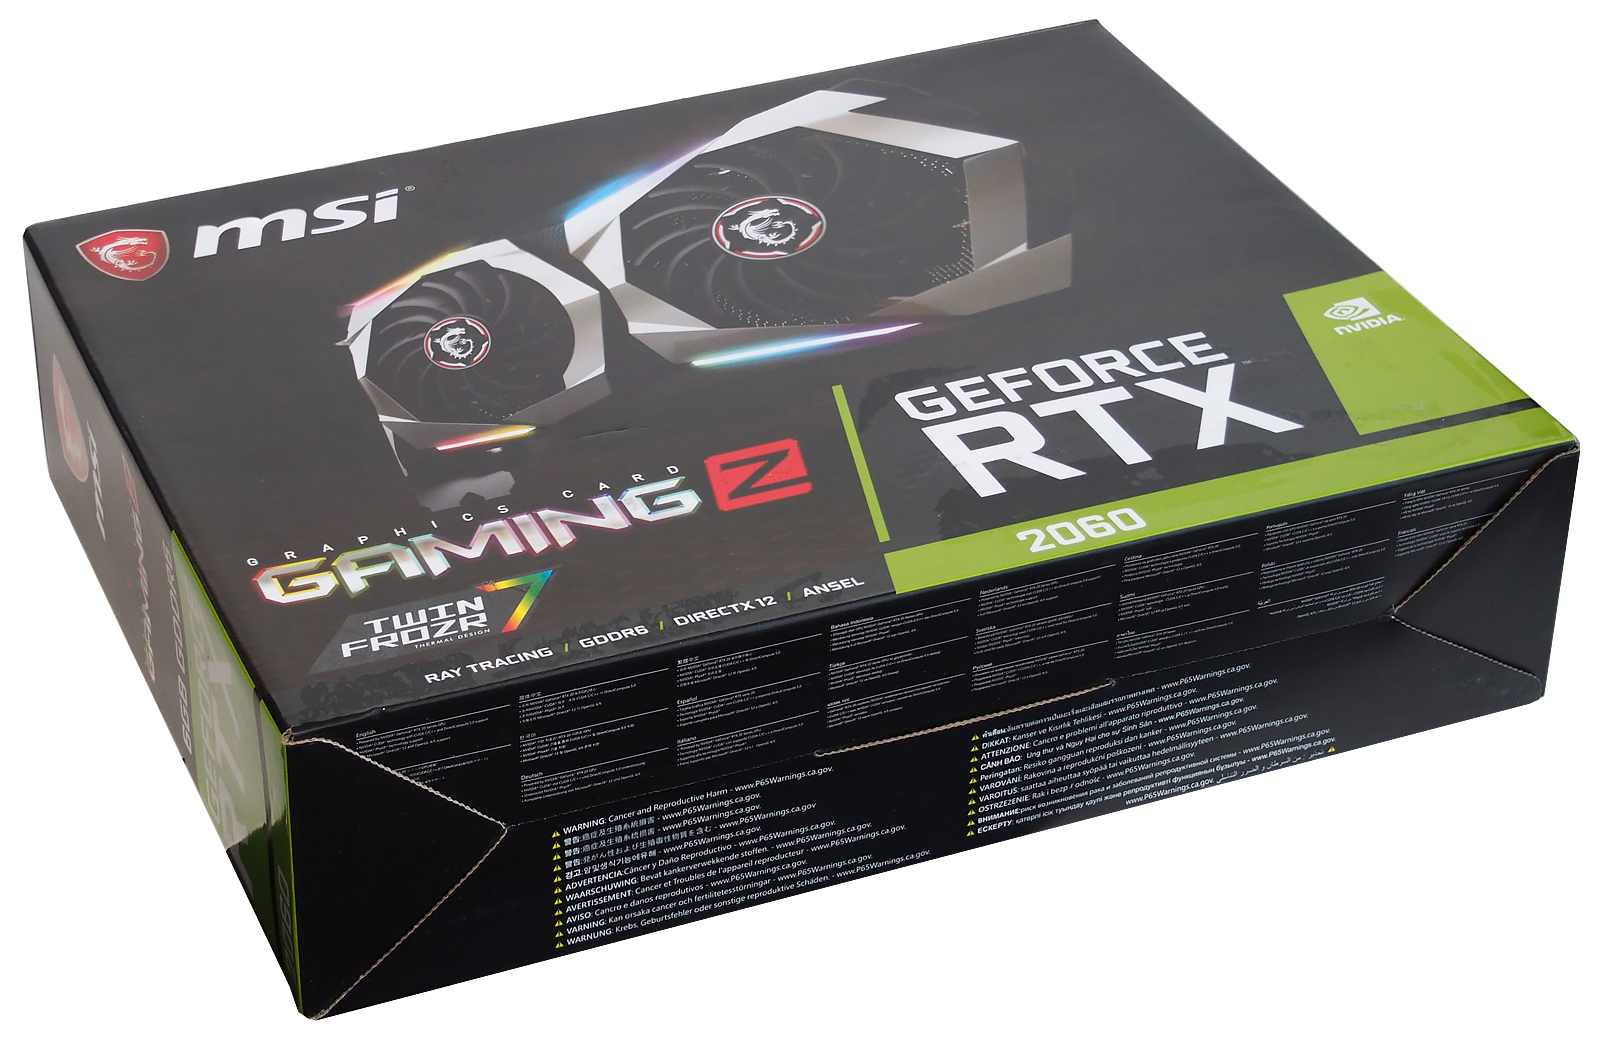 GEFORCE RTX 2060 Gaming z 6g. RTX 2060 MSI Gaming z. Коробка от MSI RTX 2060. Видеокарта РТХ 2060 МСИ упаковка. Rtx 2060 gaming pro